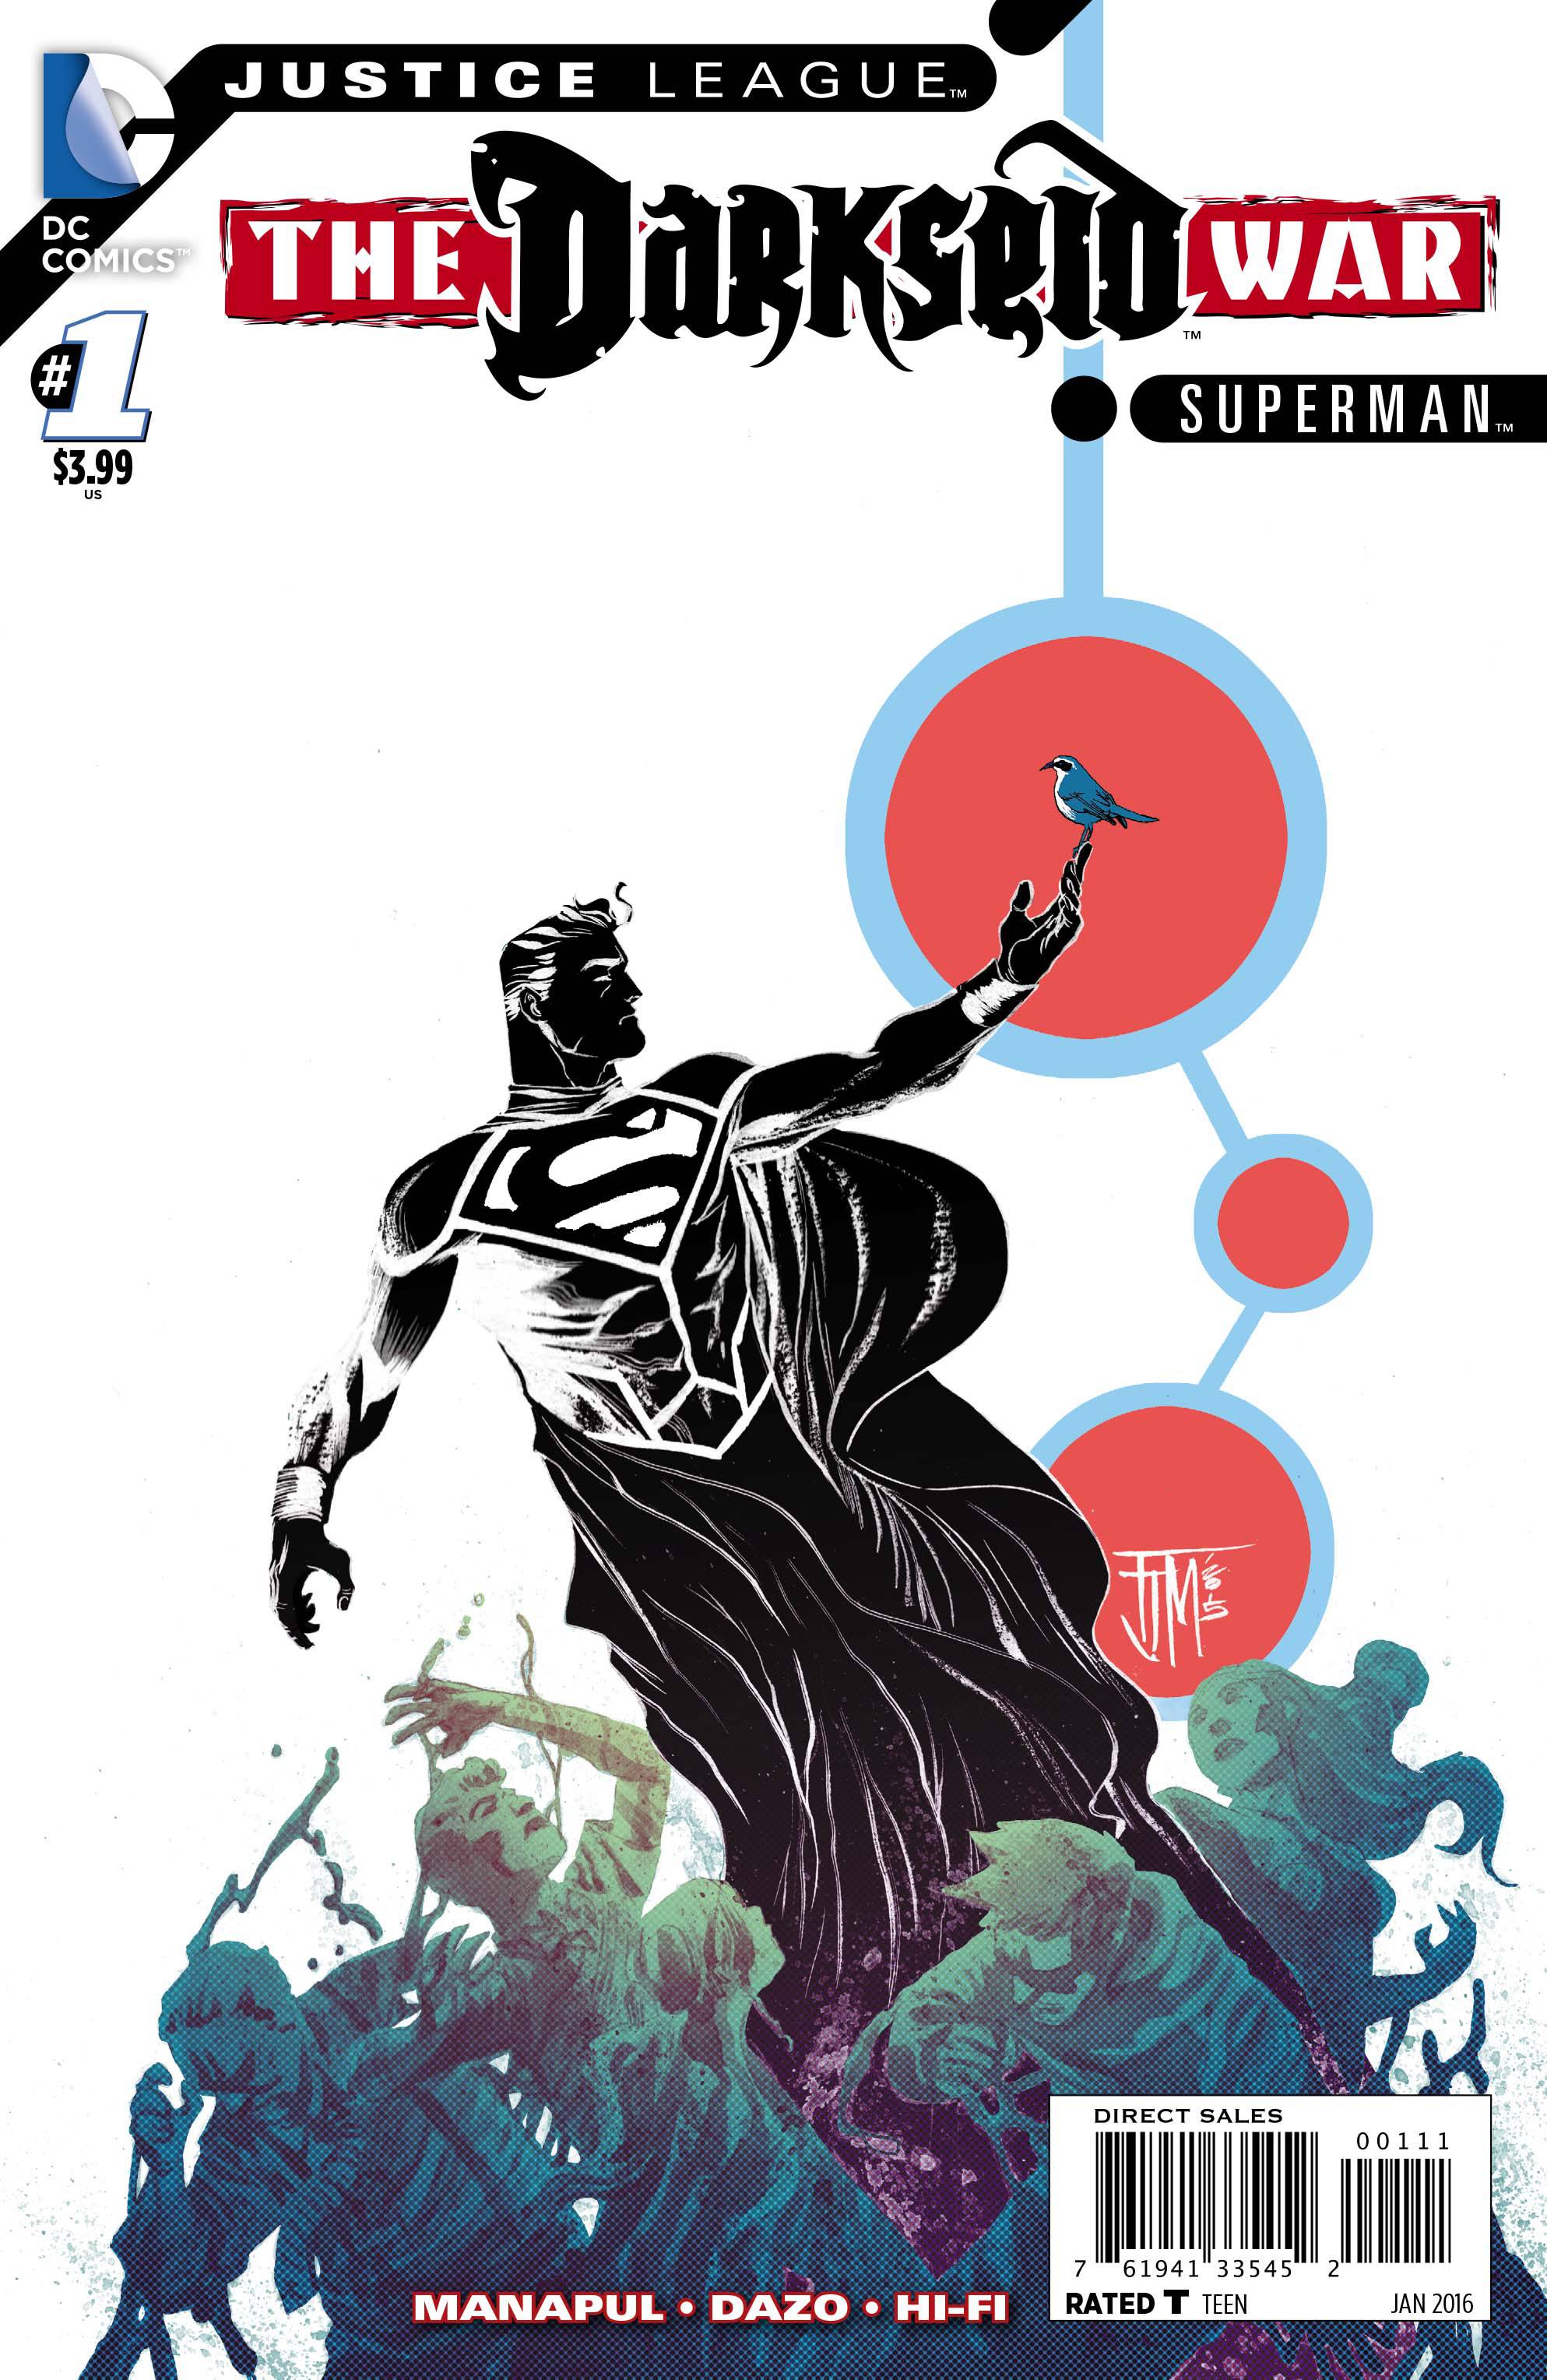 Justice League The Darkseid War Superman #1